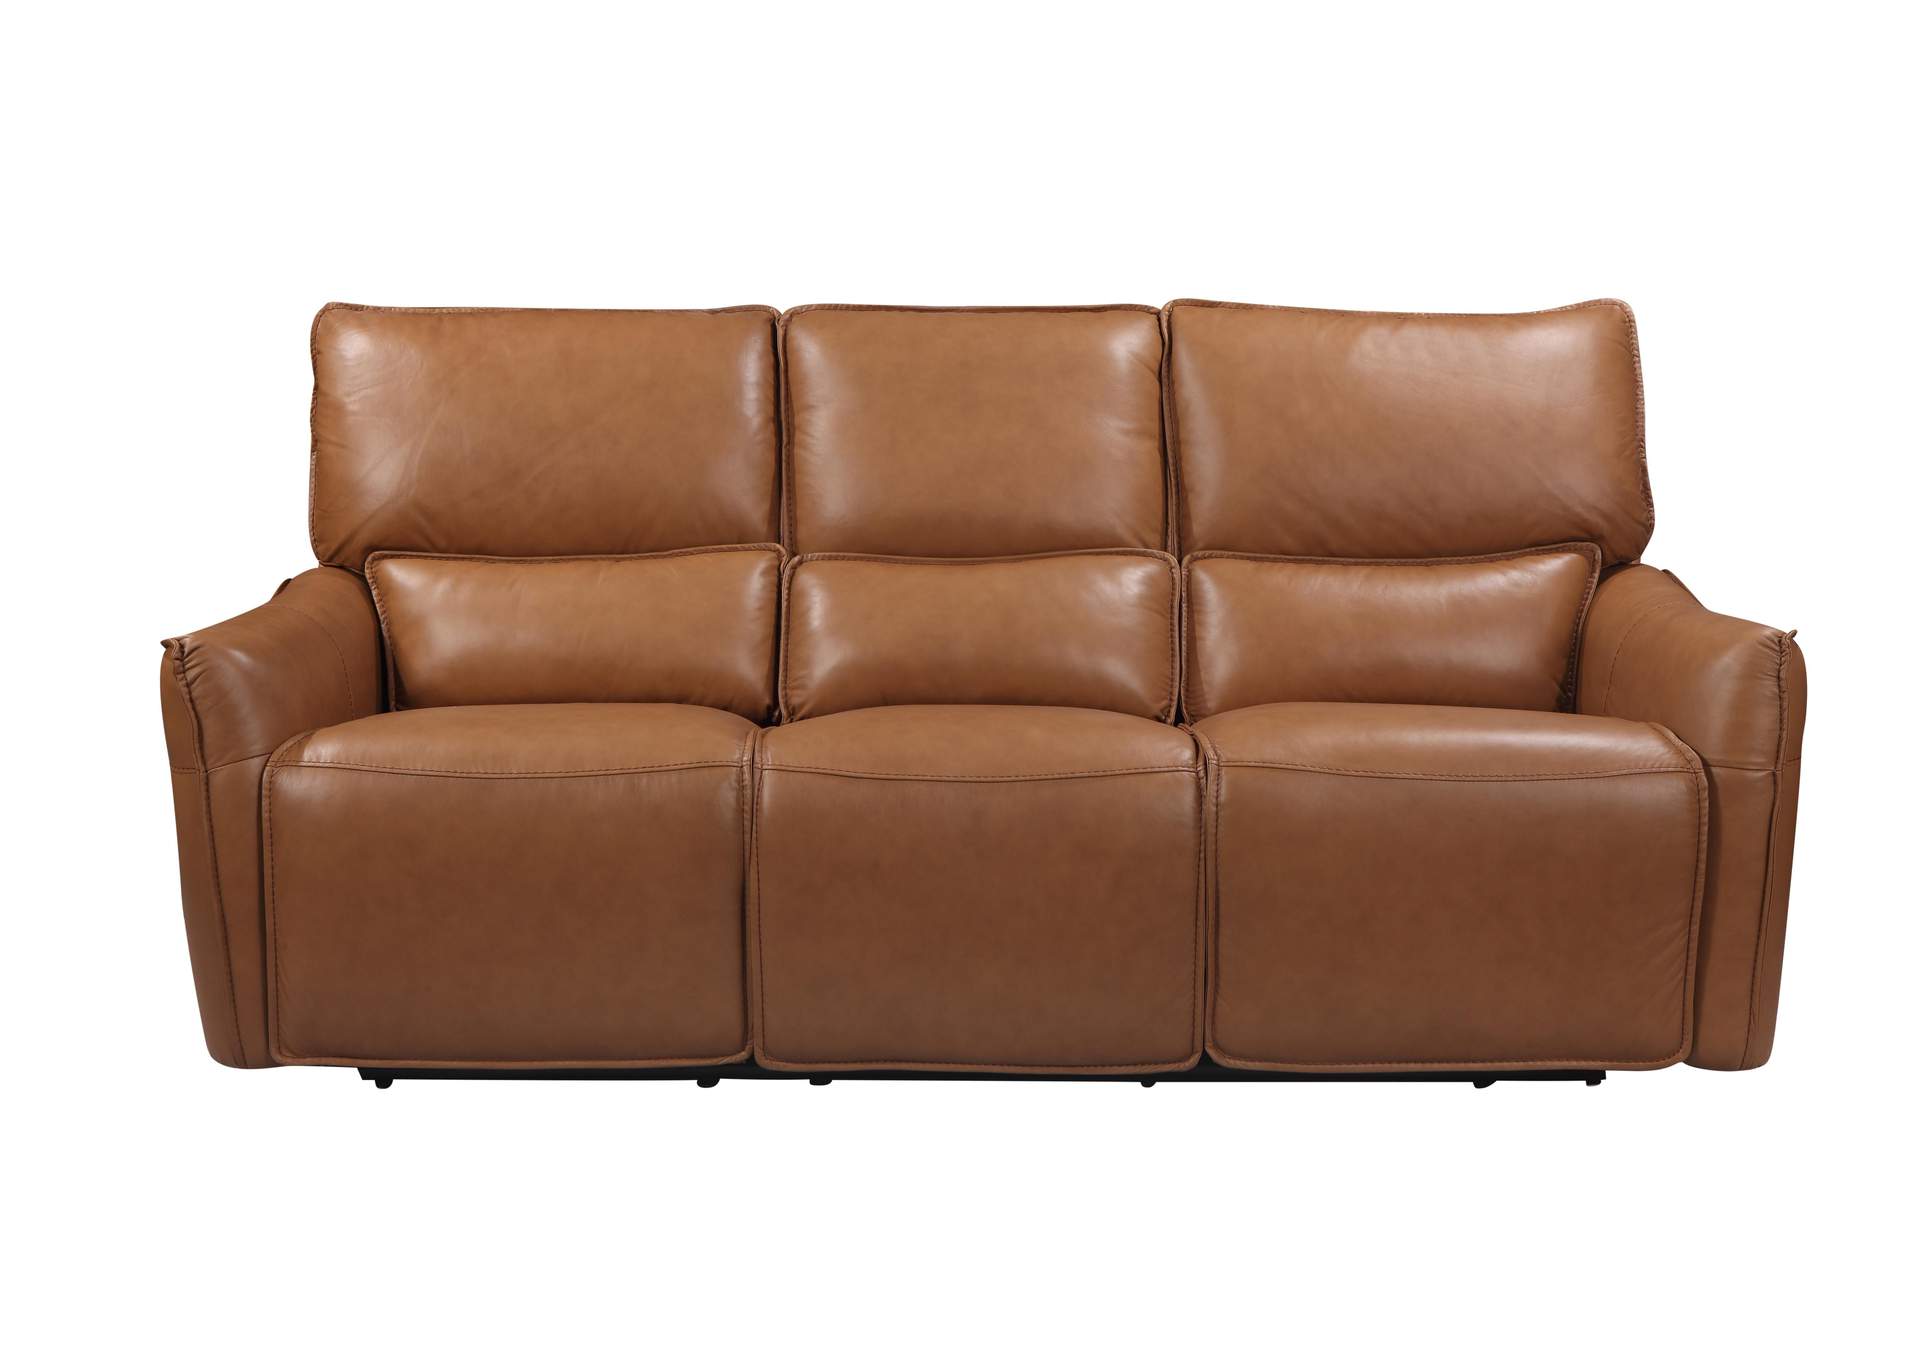 Shae Eh12109 Portland P2 Sofa 1006Lv Desert,Leather Italia USA